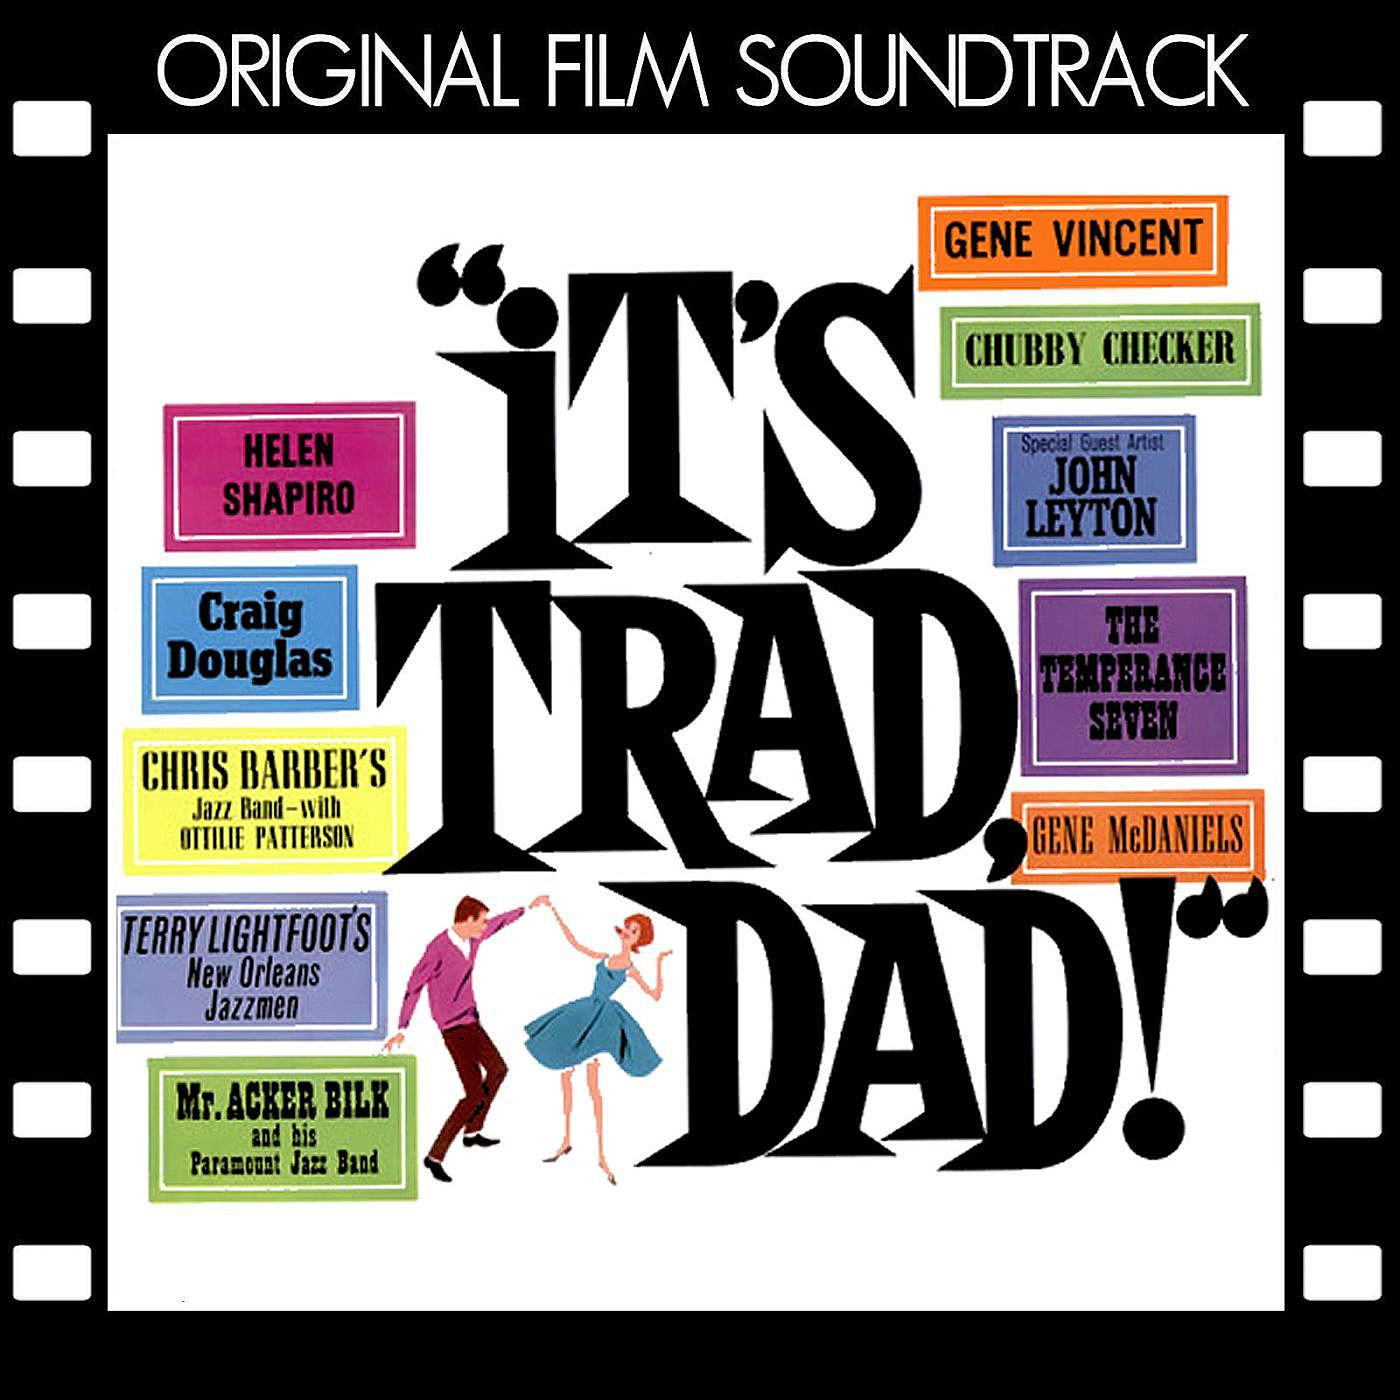 It's Trad Dad Original Film Soundtrack.